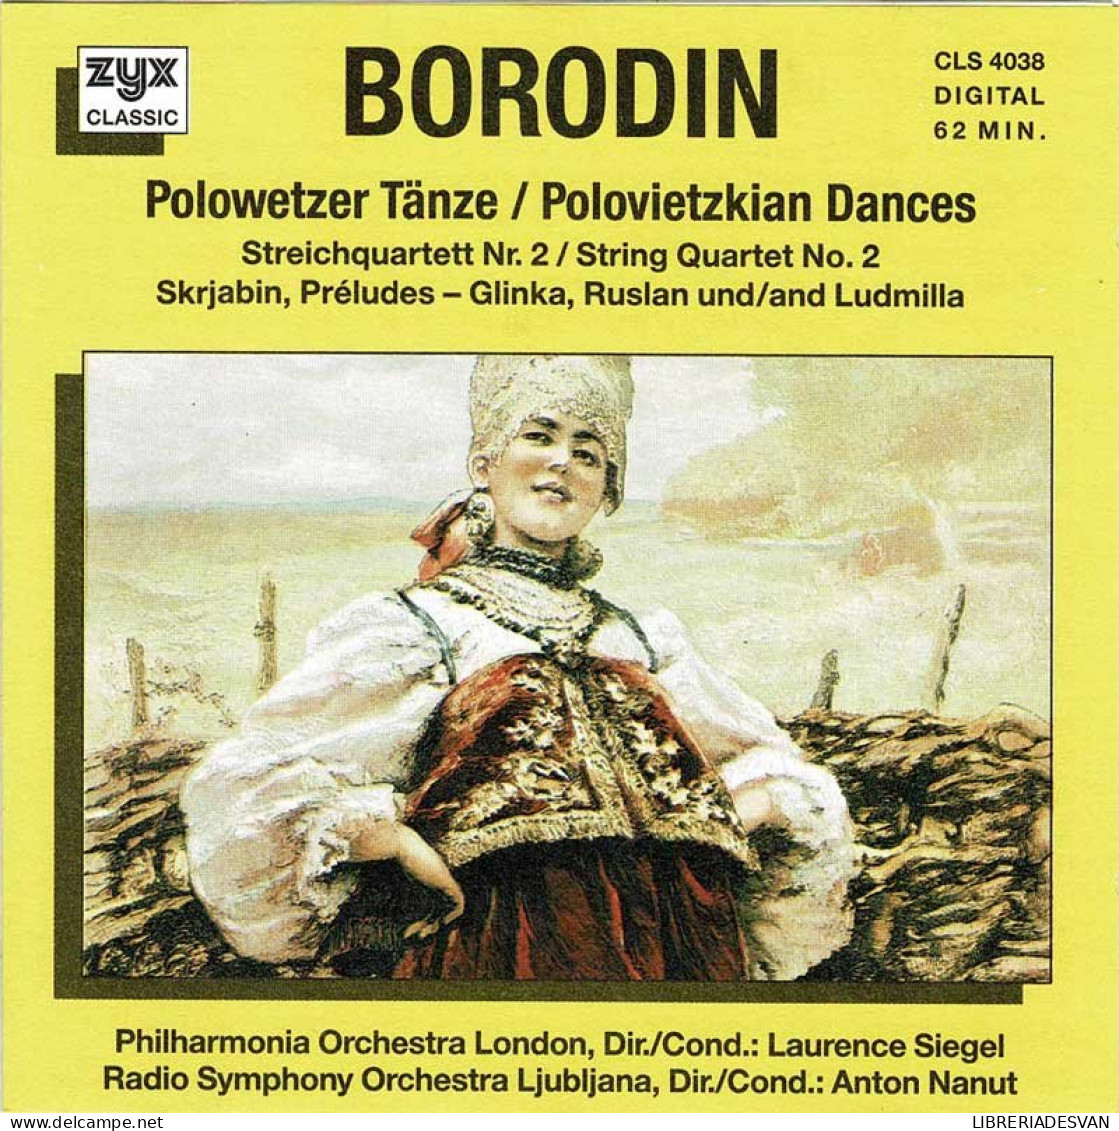 Borodin - Polovietzkian Dances. CD - Classica